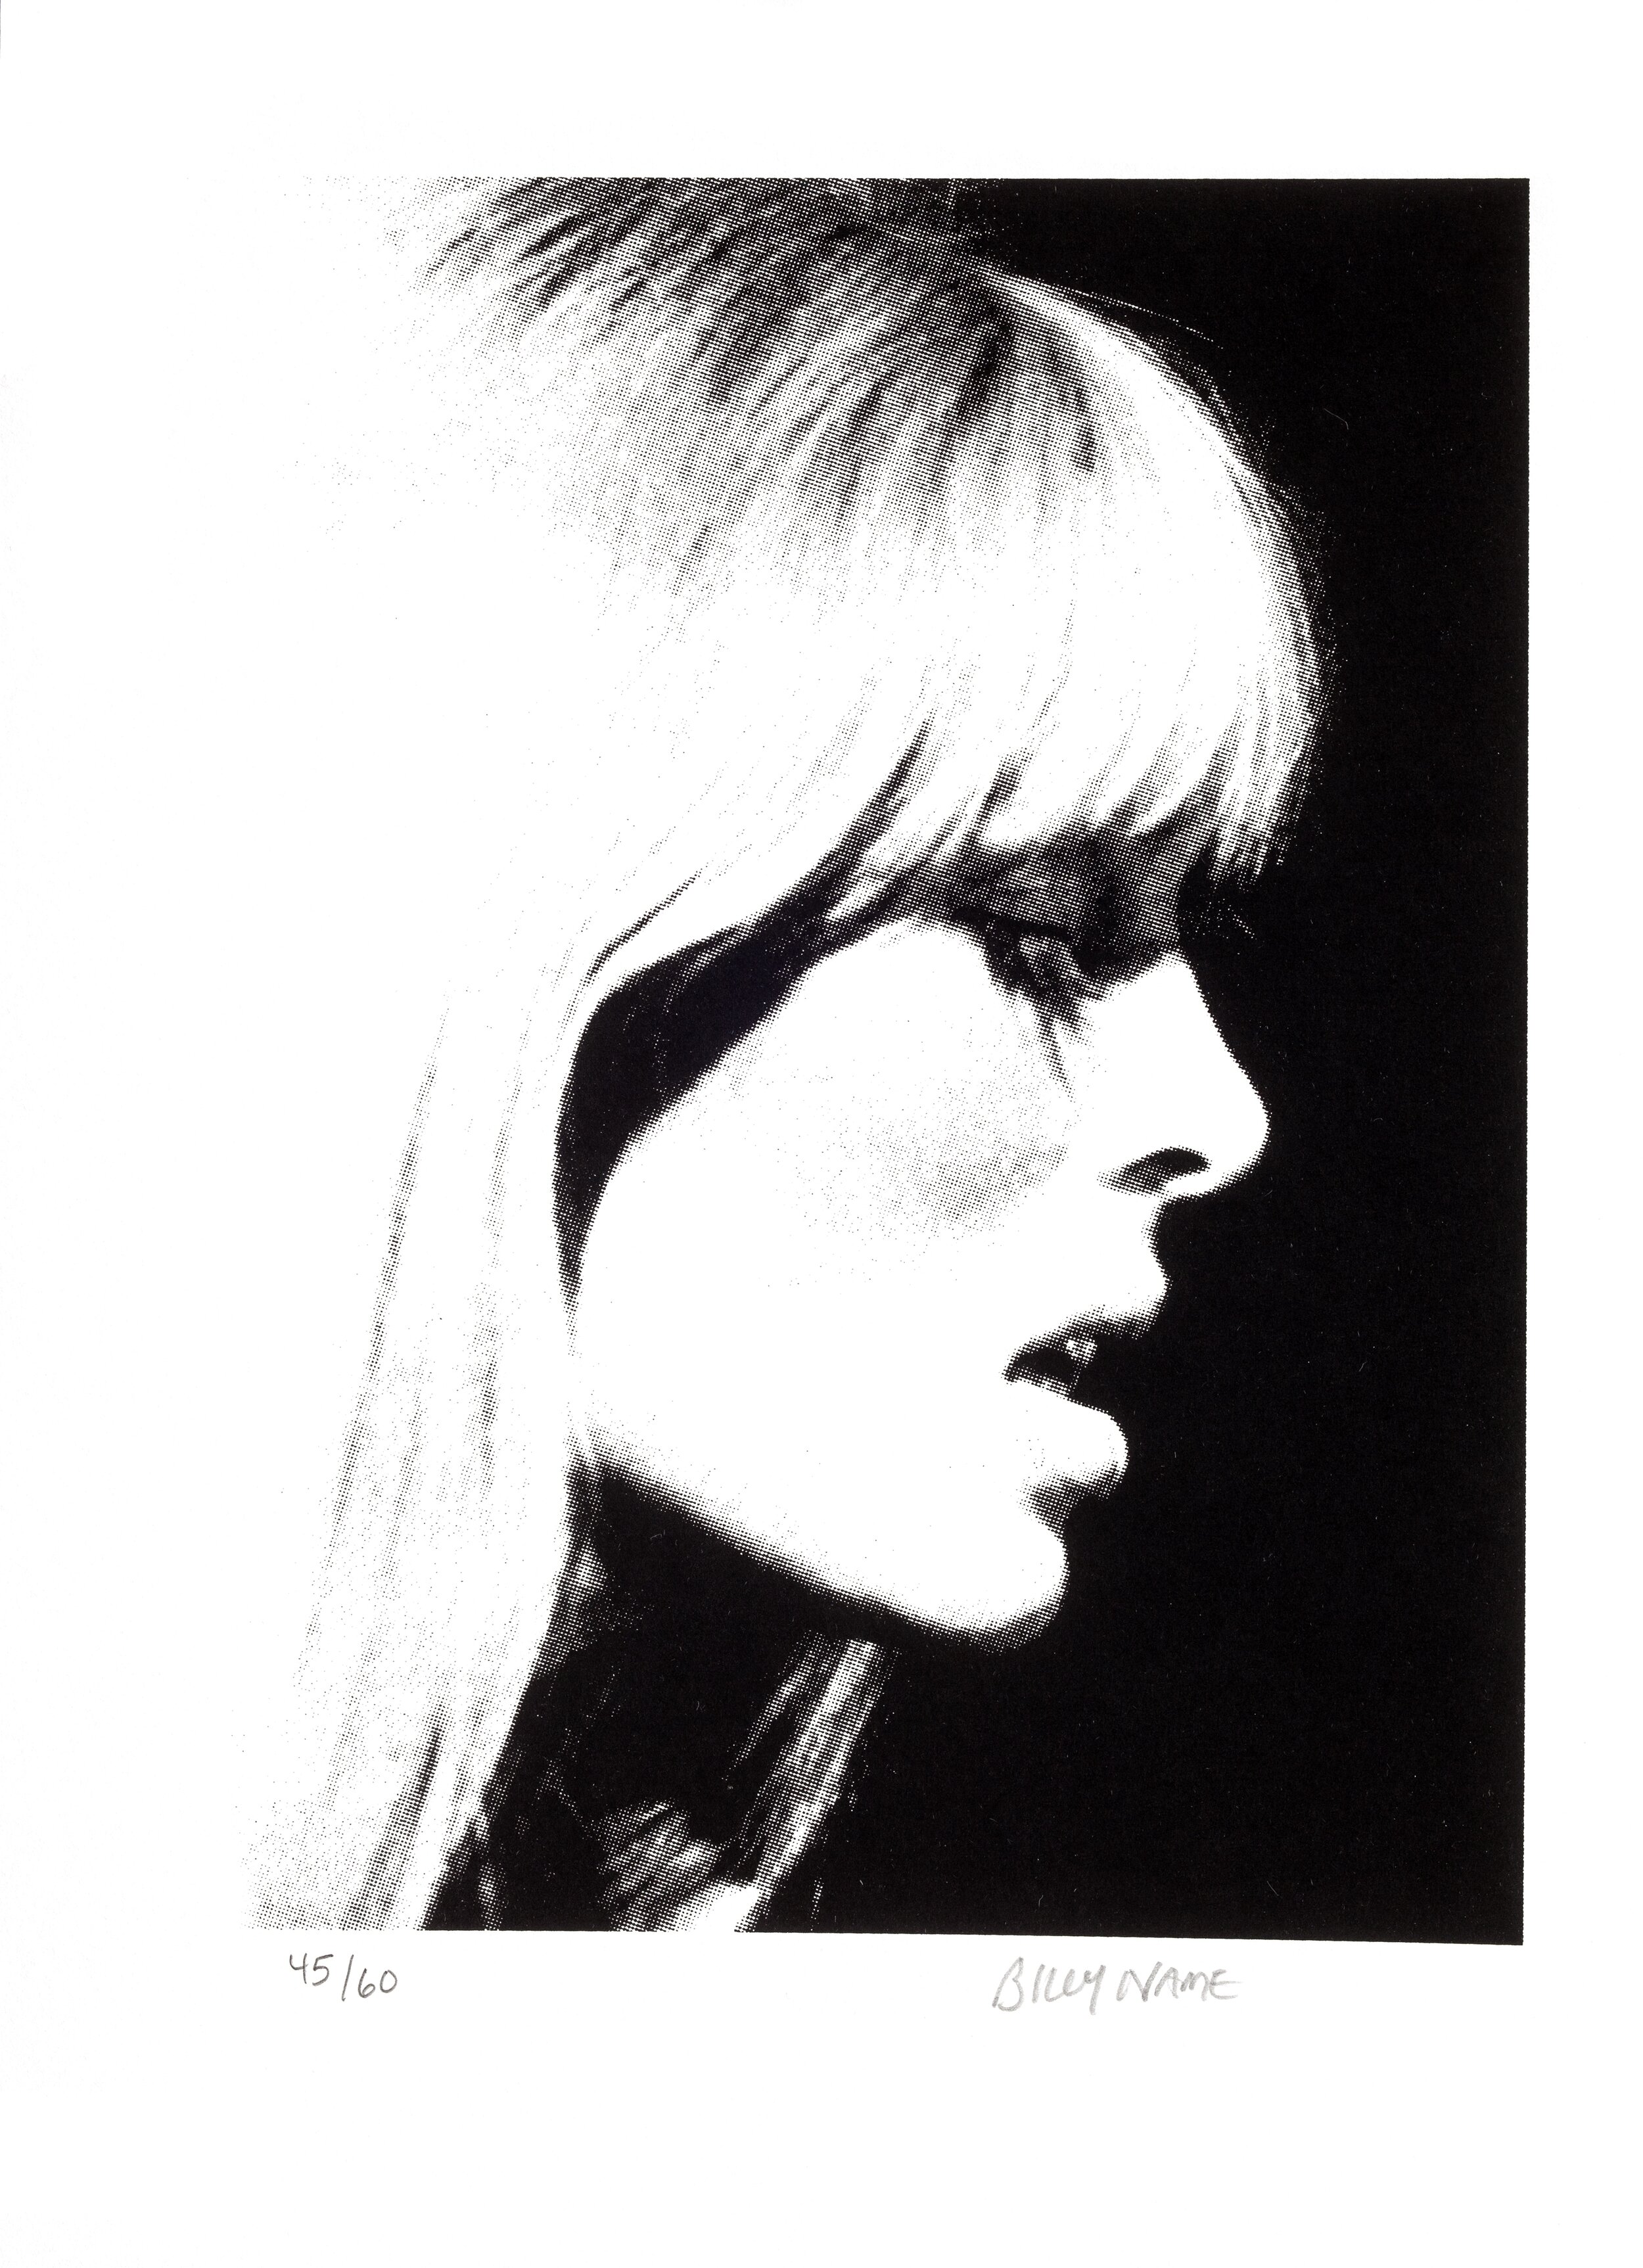 Billy Name, Nico #3 (profile), 1967 - silksreen.jpg